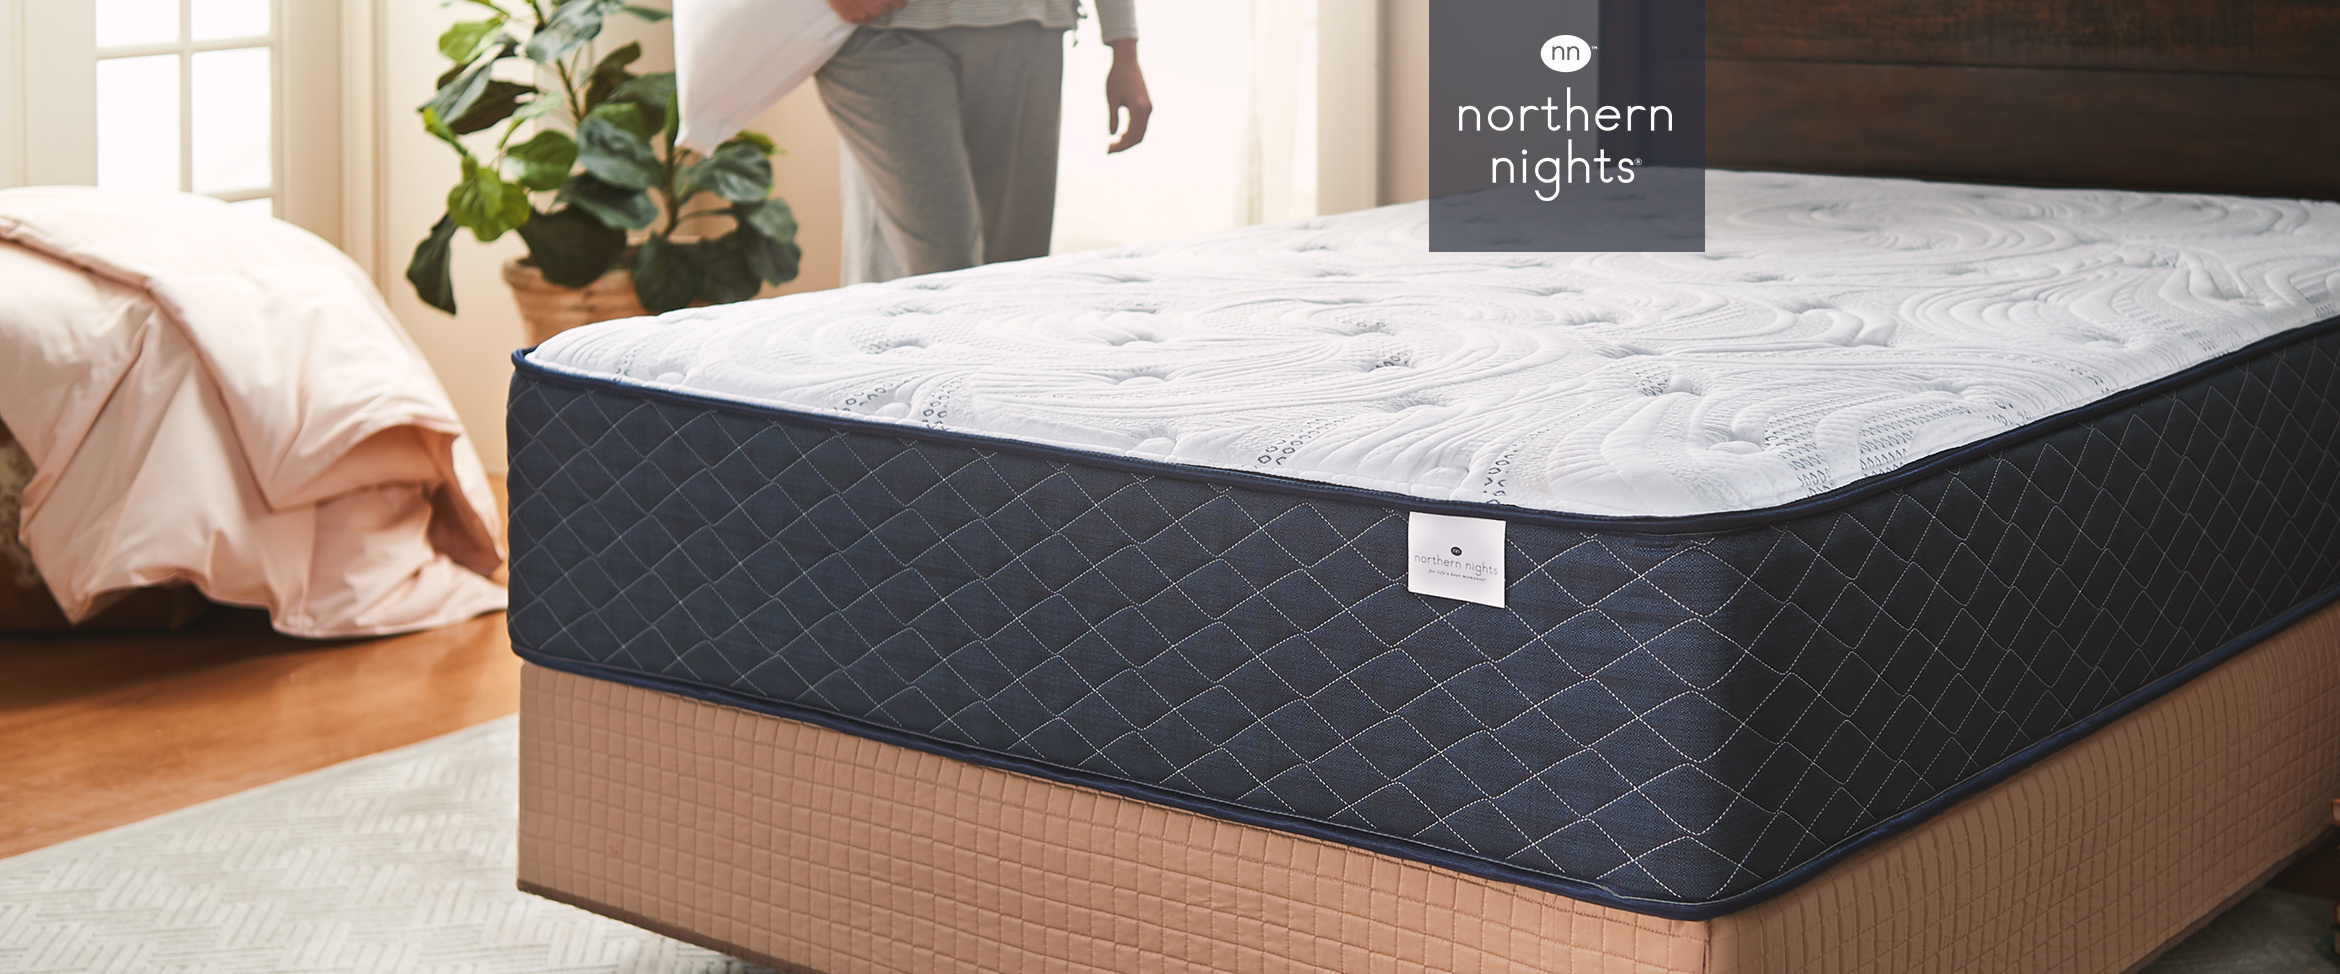 northern nights mattress in a box